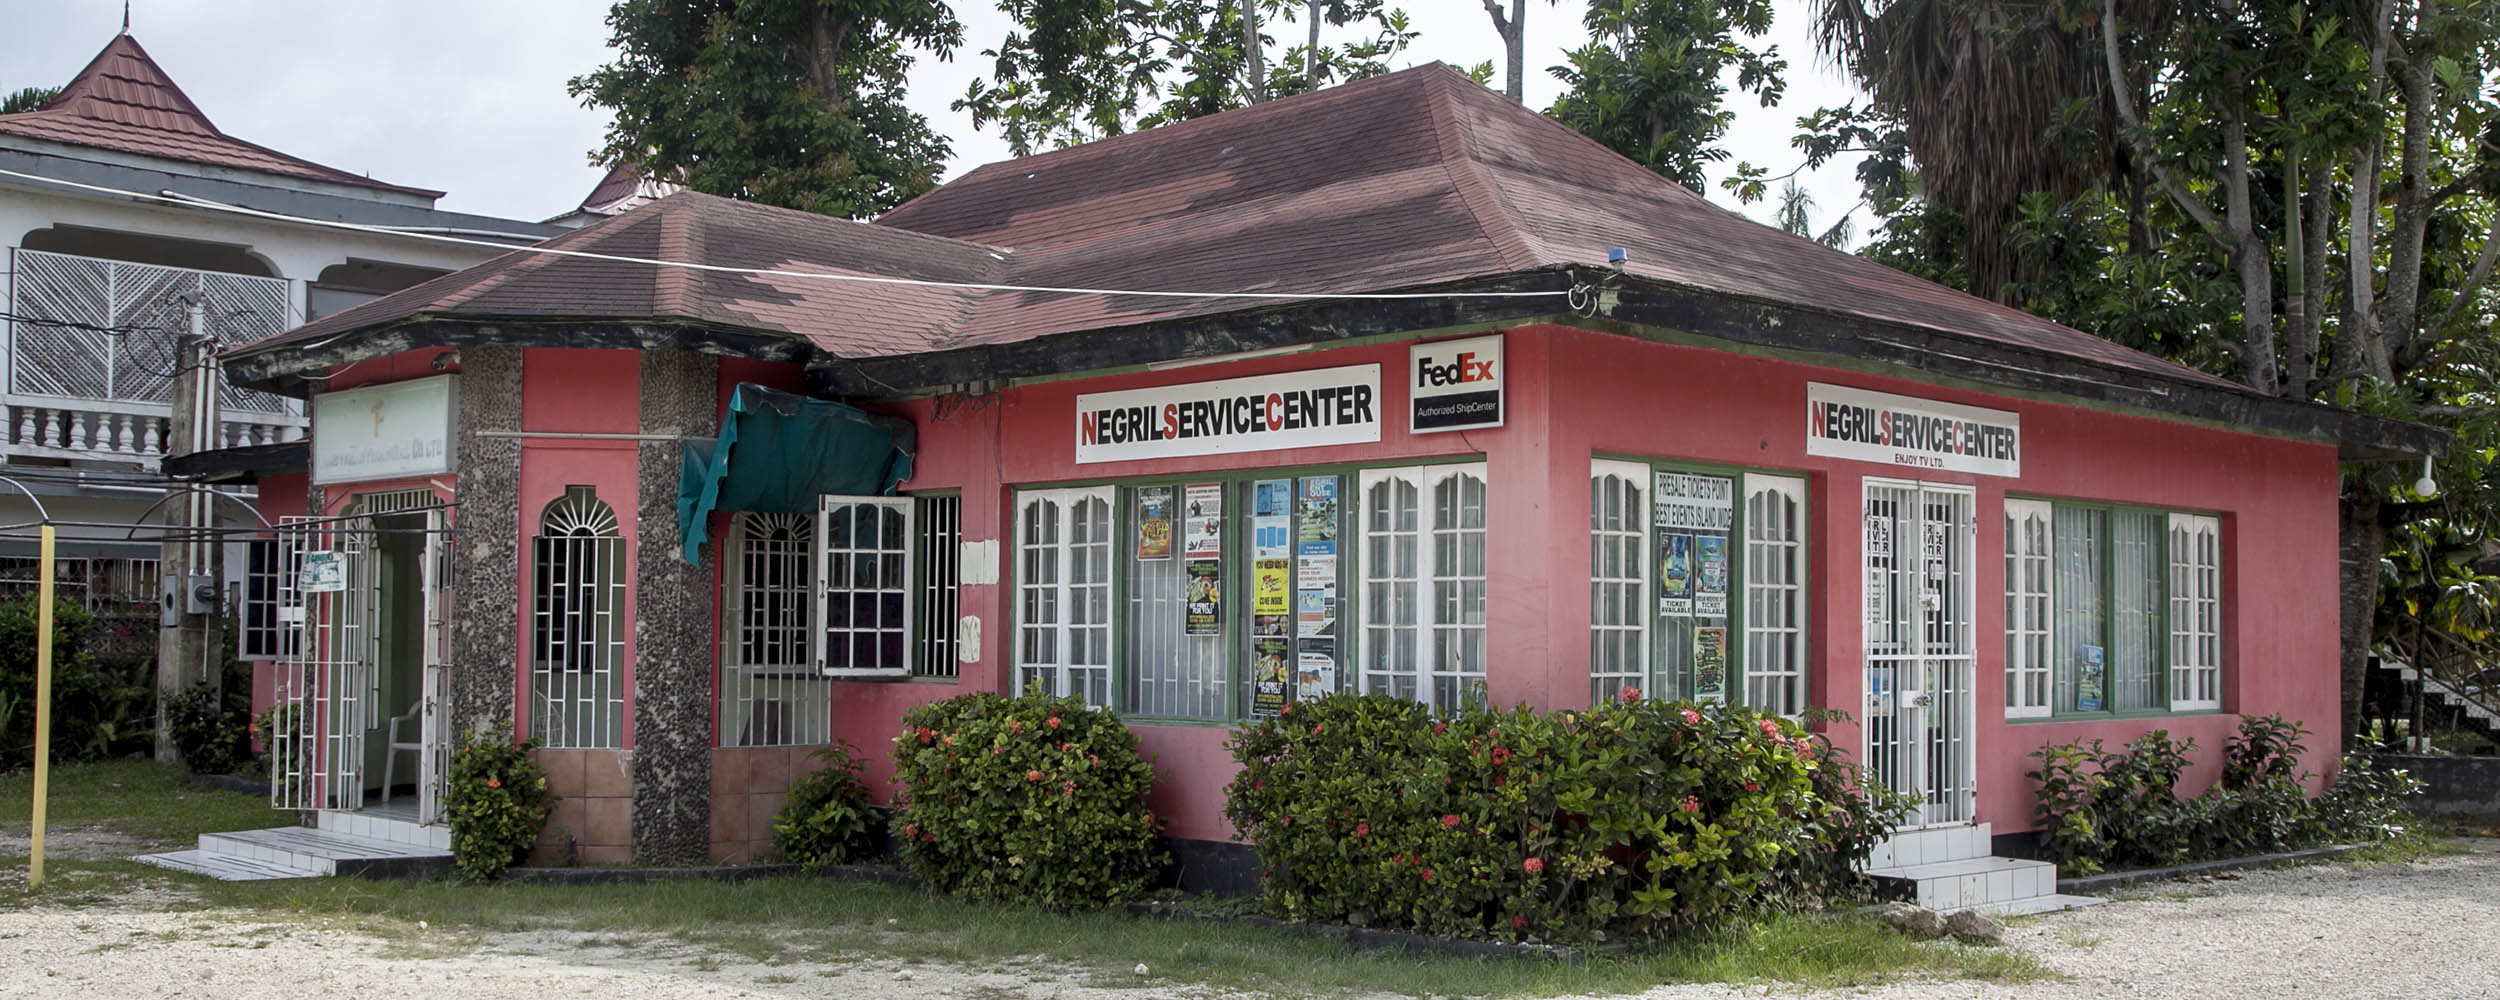 Negril Service Center - Norman Manley Boulevard - Negril Jamaica